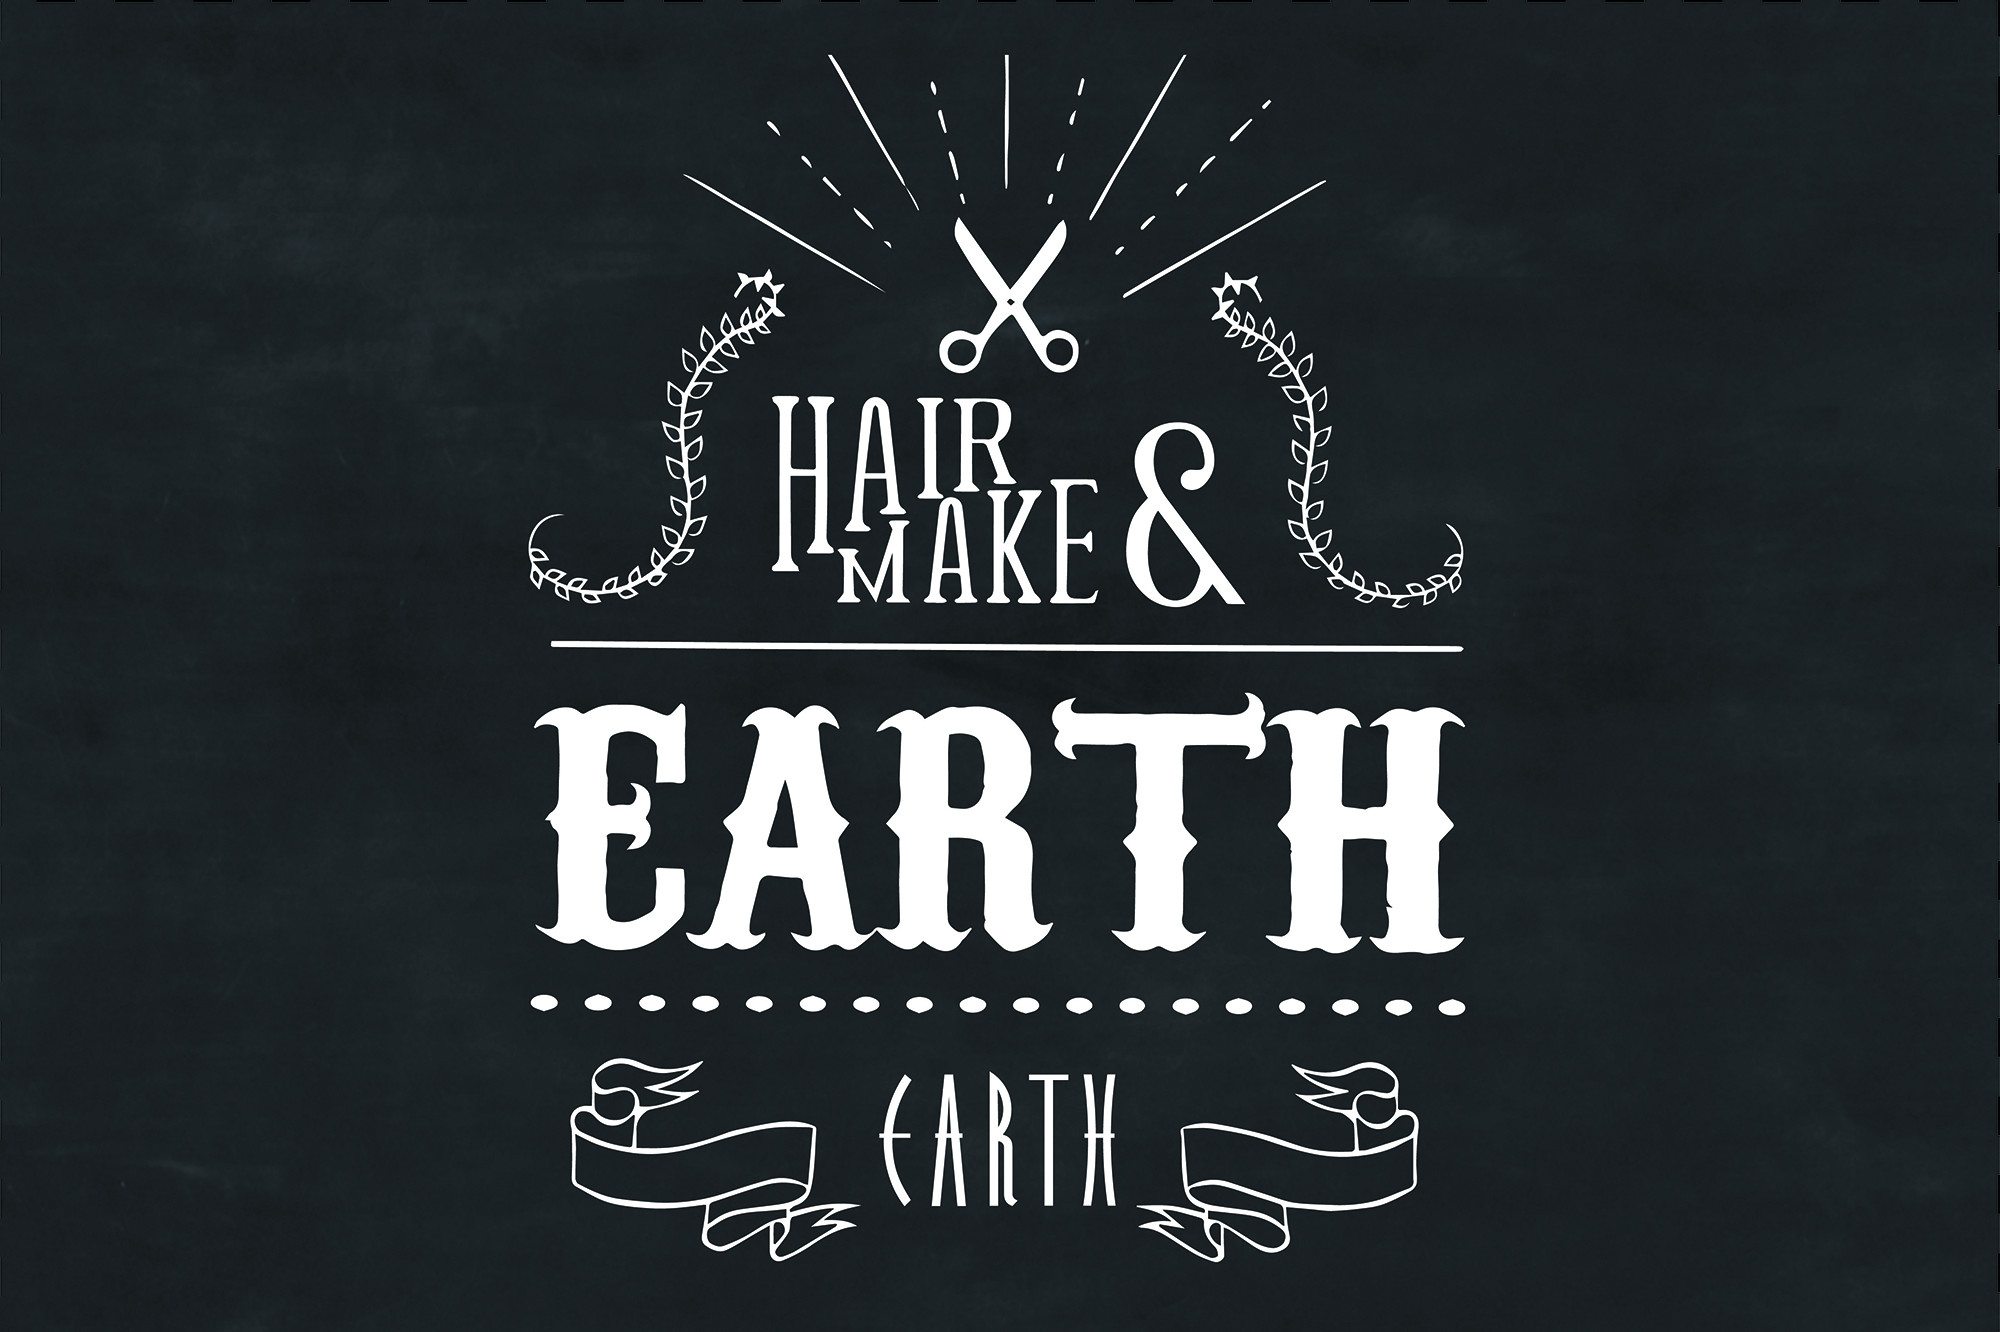 Hair Make Earth アース 新卒求人 募集情報 会社概要 美容室の求人ならリクエストqj